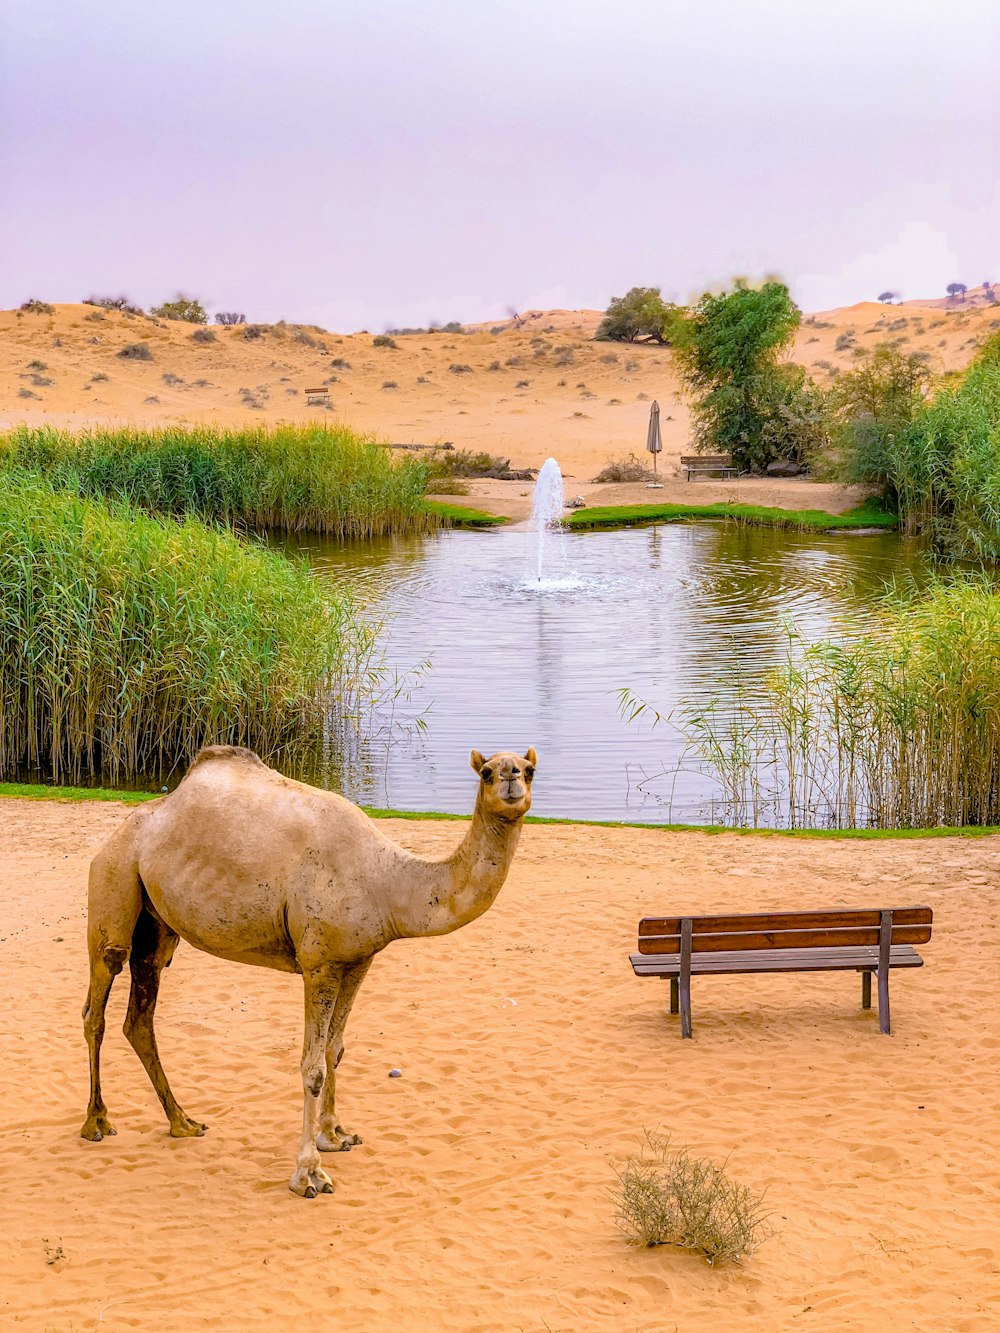 camel near bench facing body of water